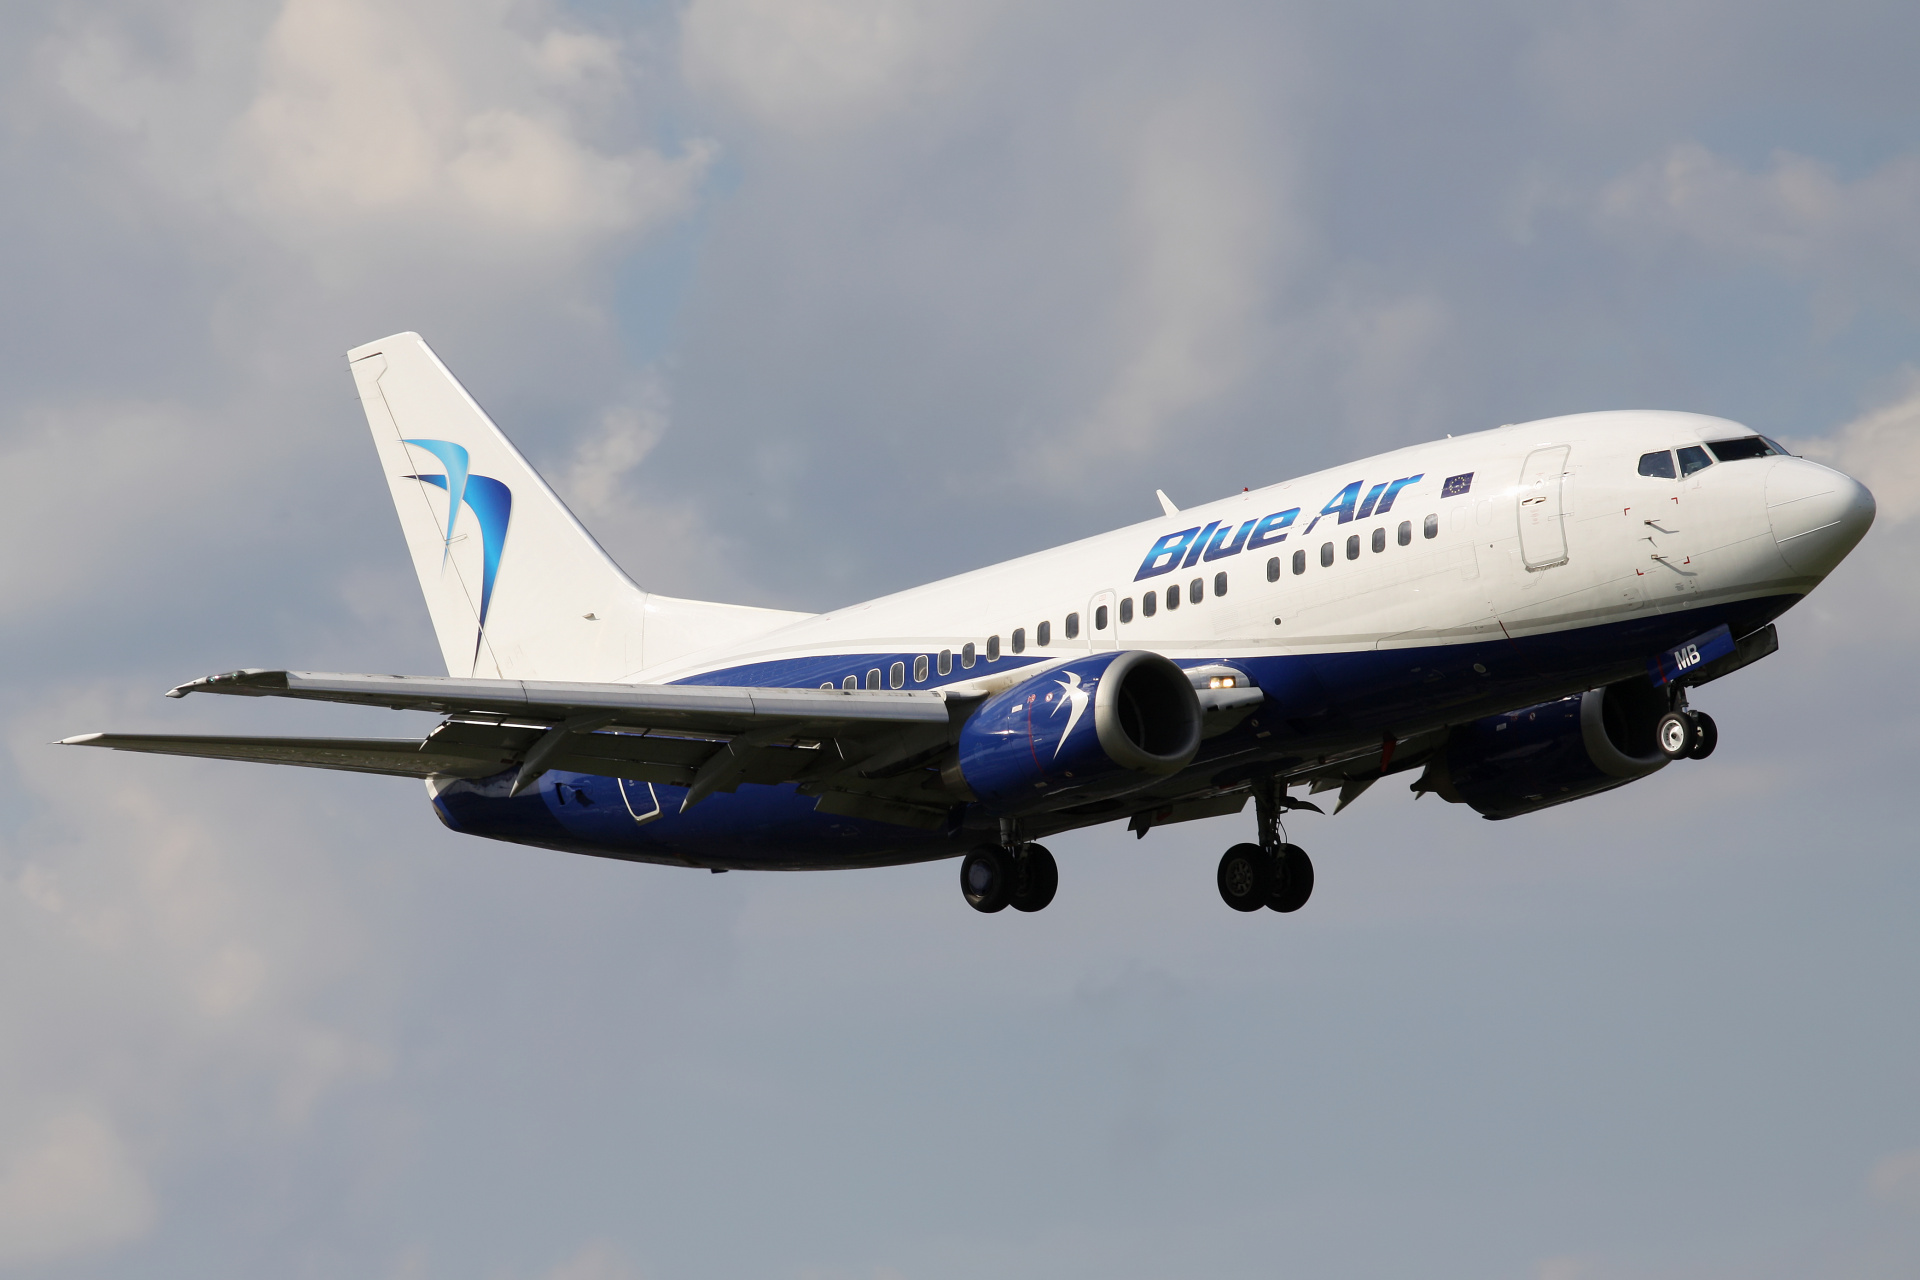 YR-AMB, Blue Air (Aircraft » EPWA Spotting » Boeing 737-500)